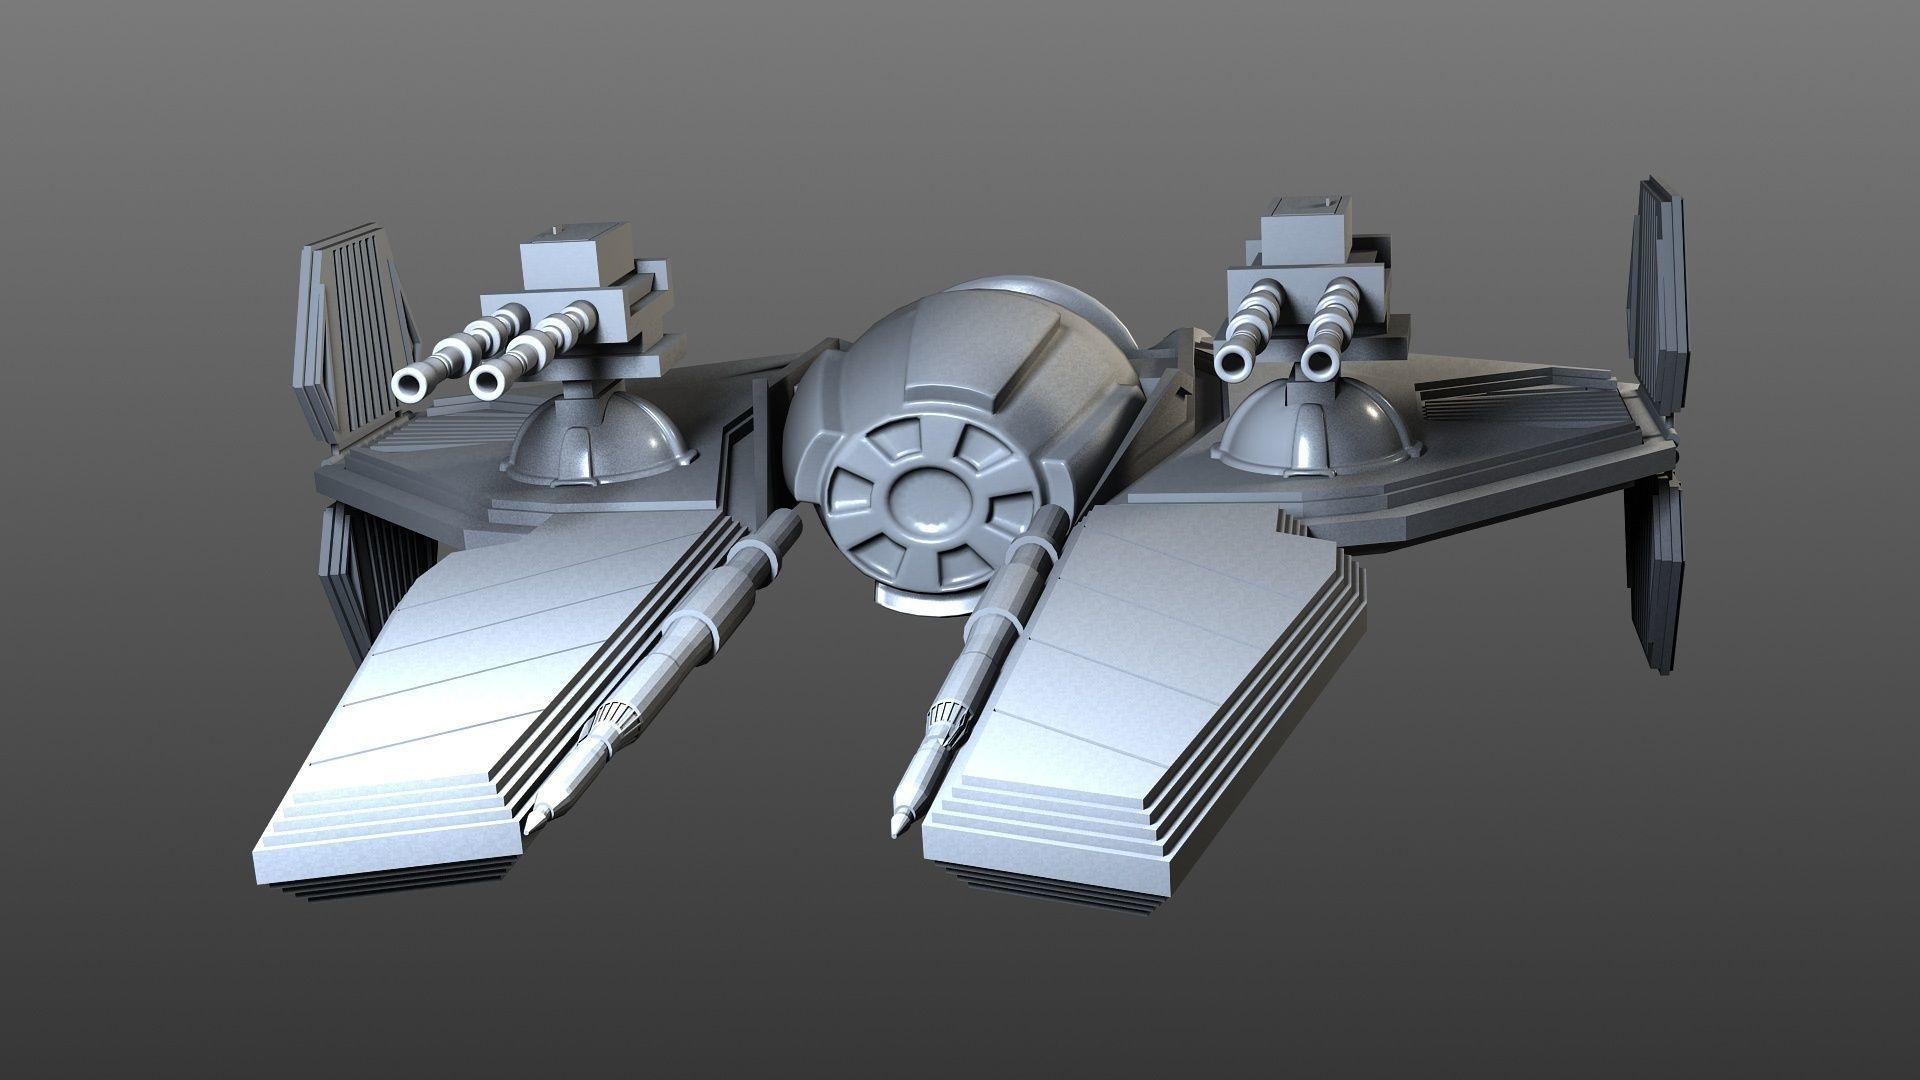 Low Poly Star Wars Spaceship 3D Model